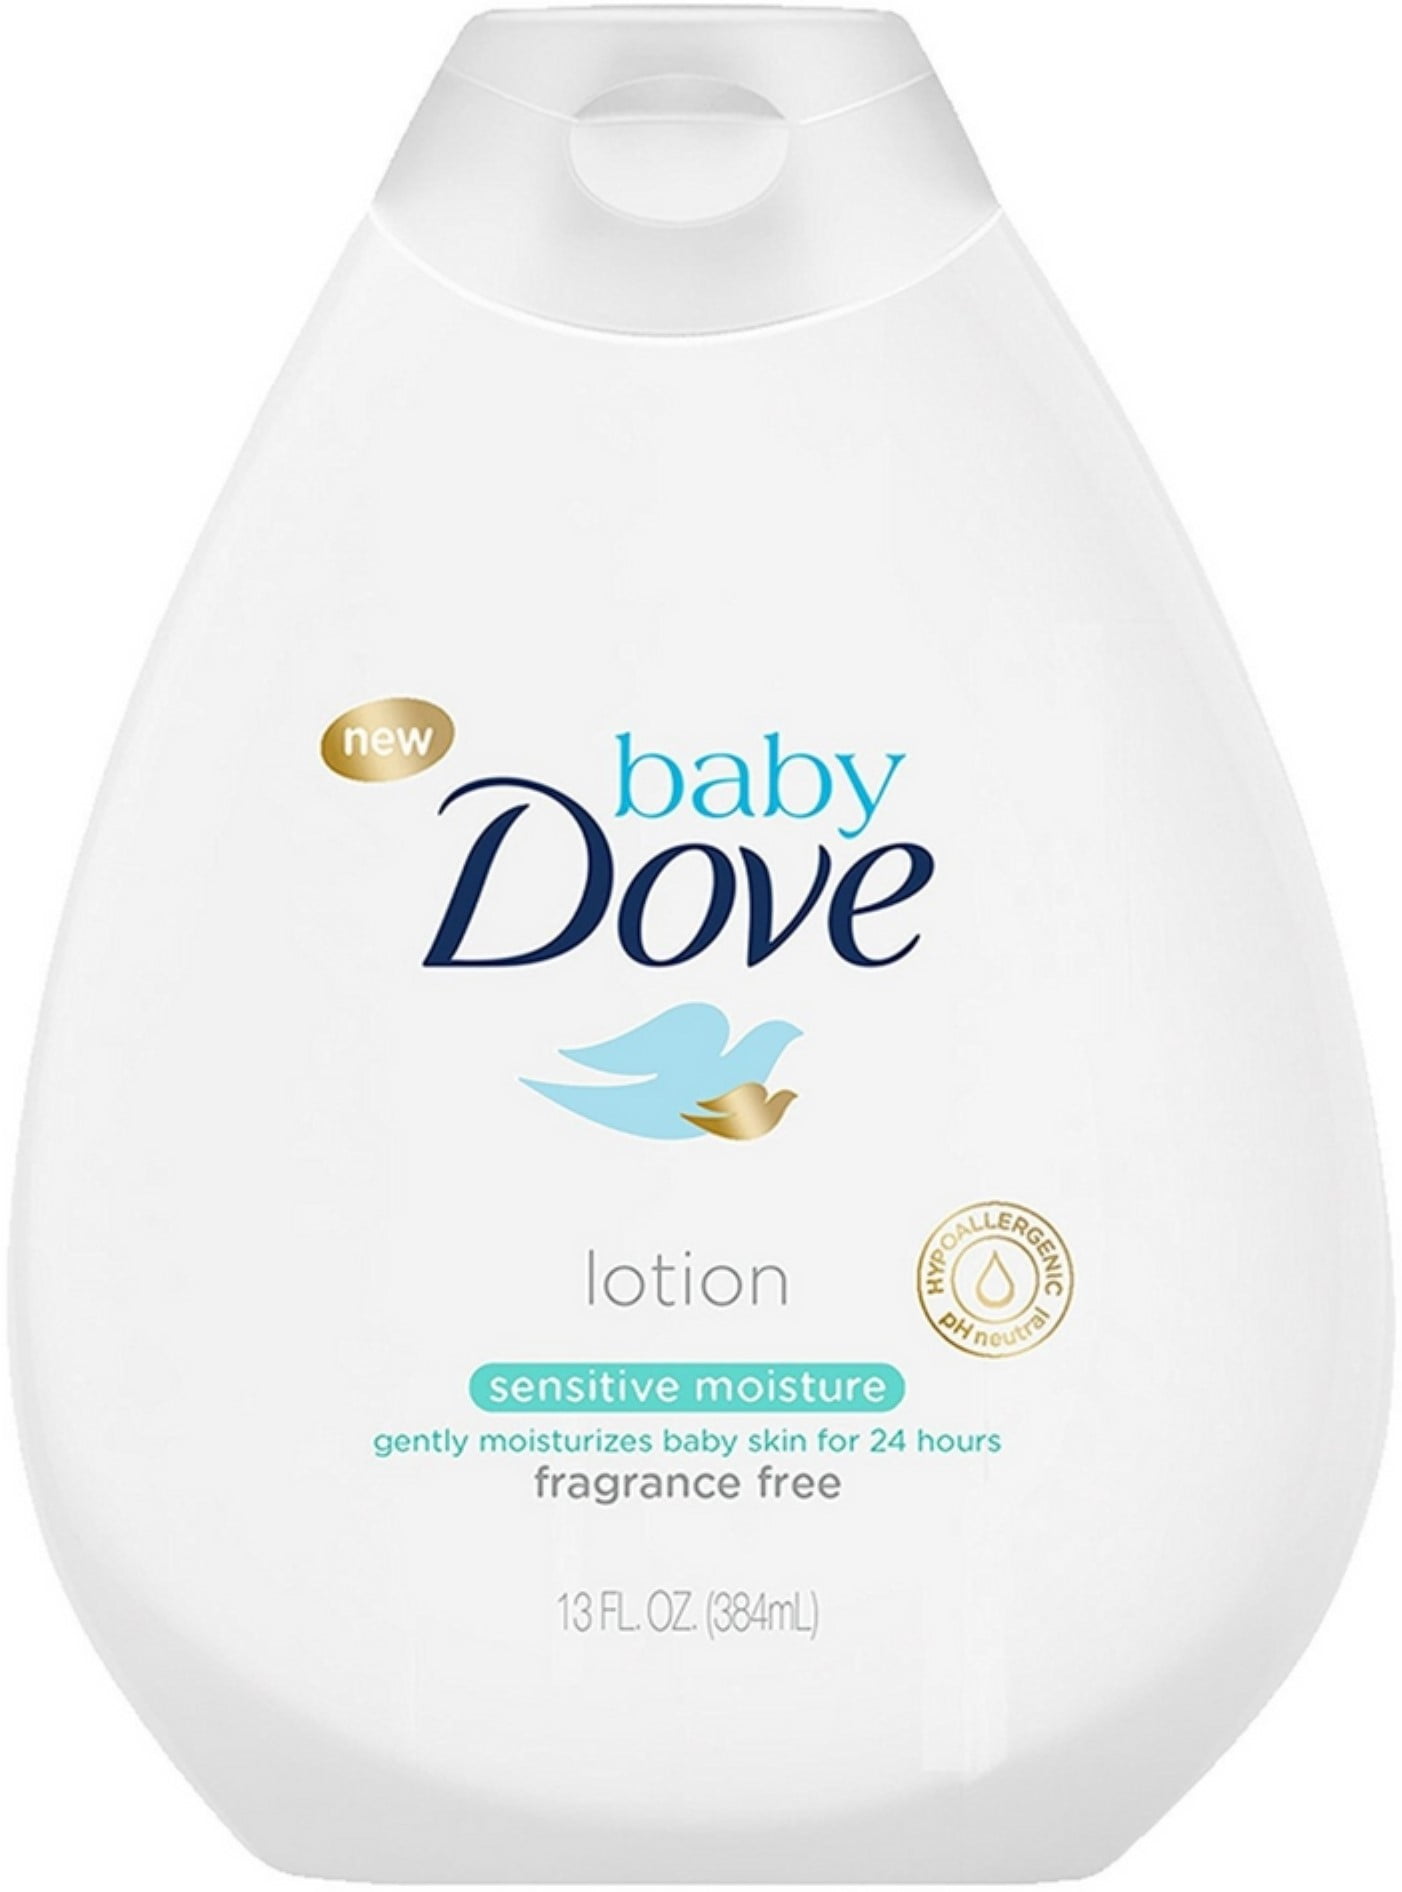 Dove Baby Lotion, Sensitive Moisture 13 oz of 2) - Walmart.com